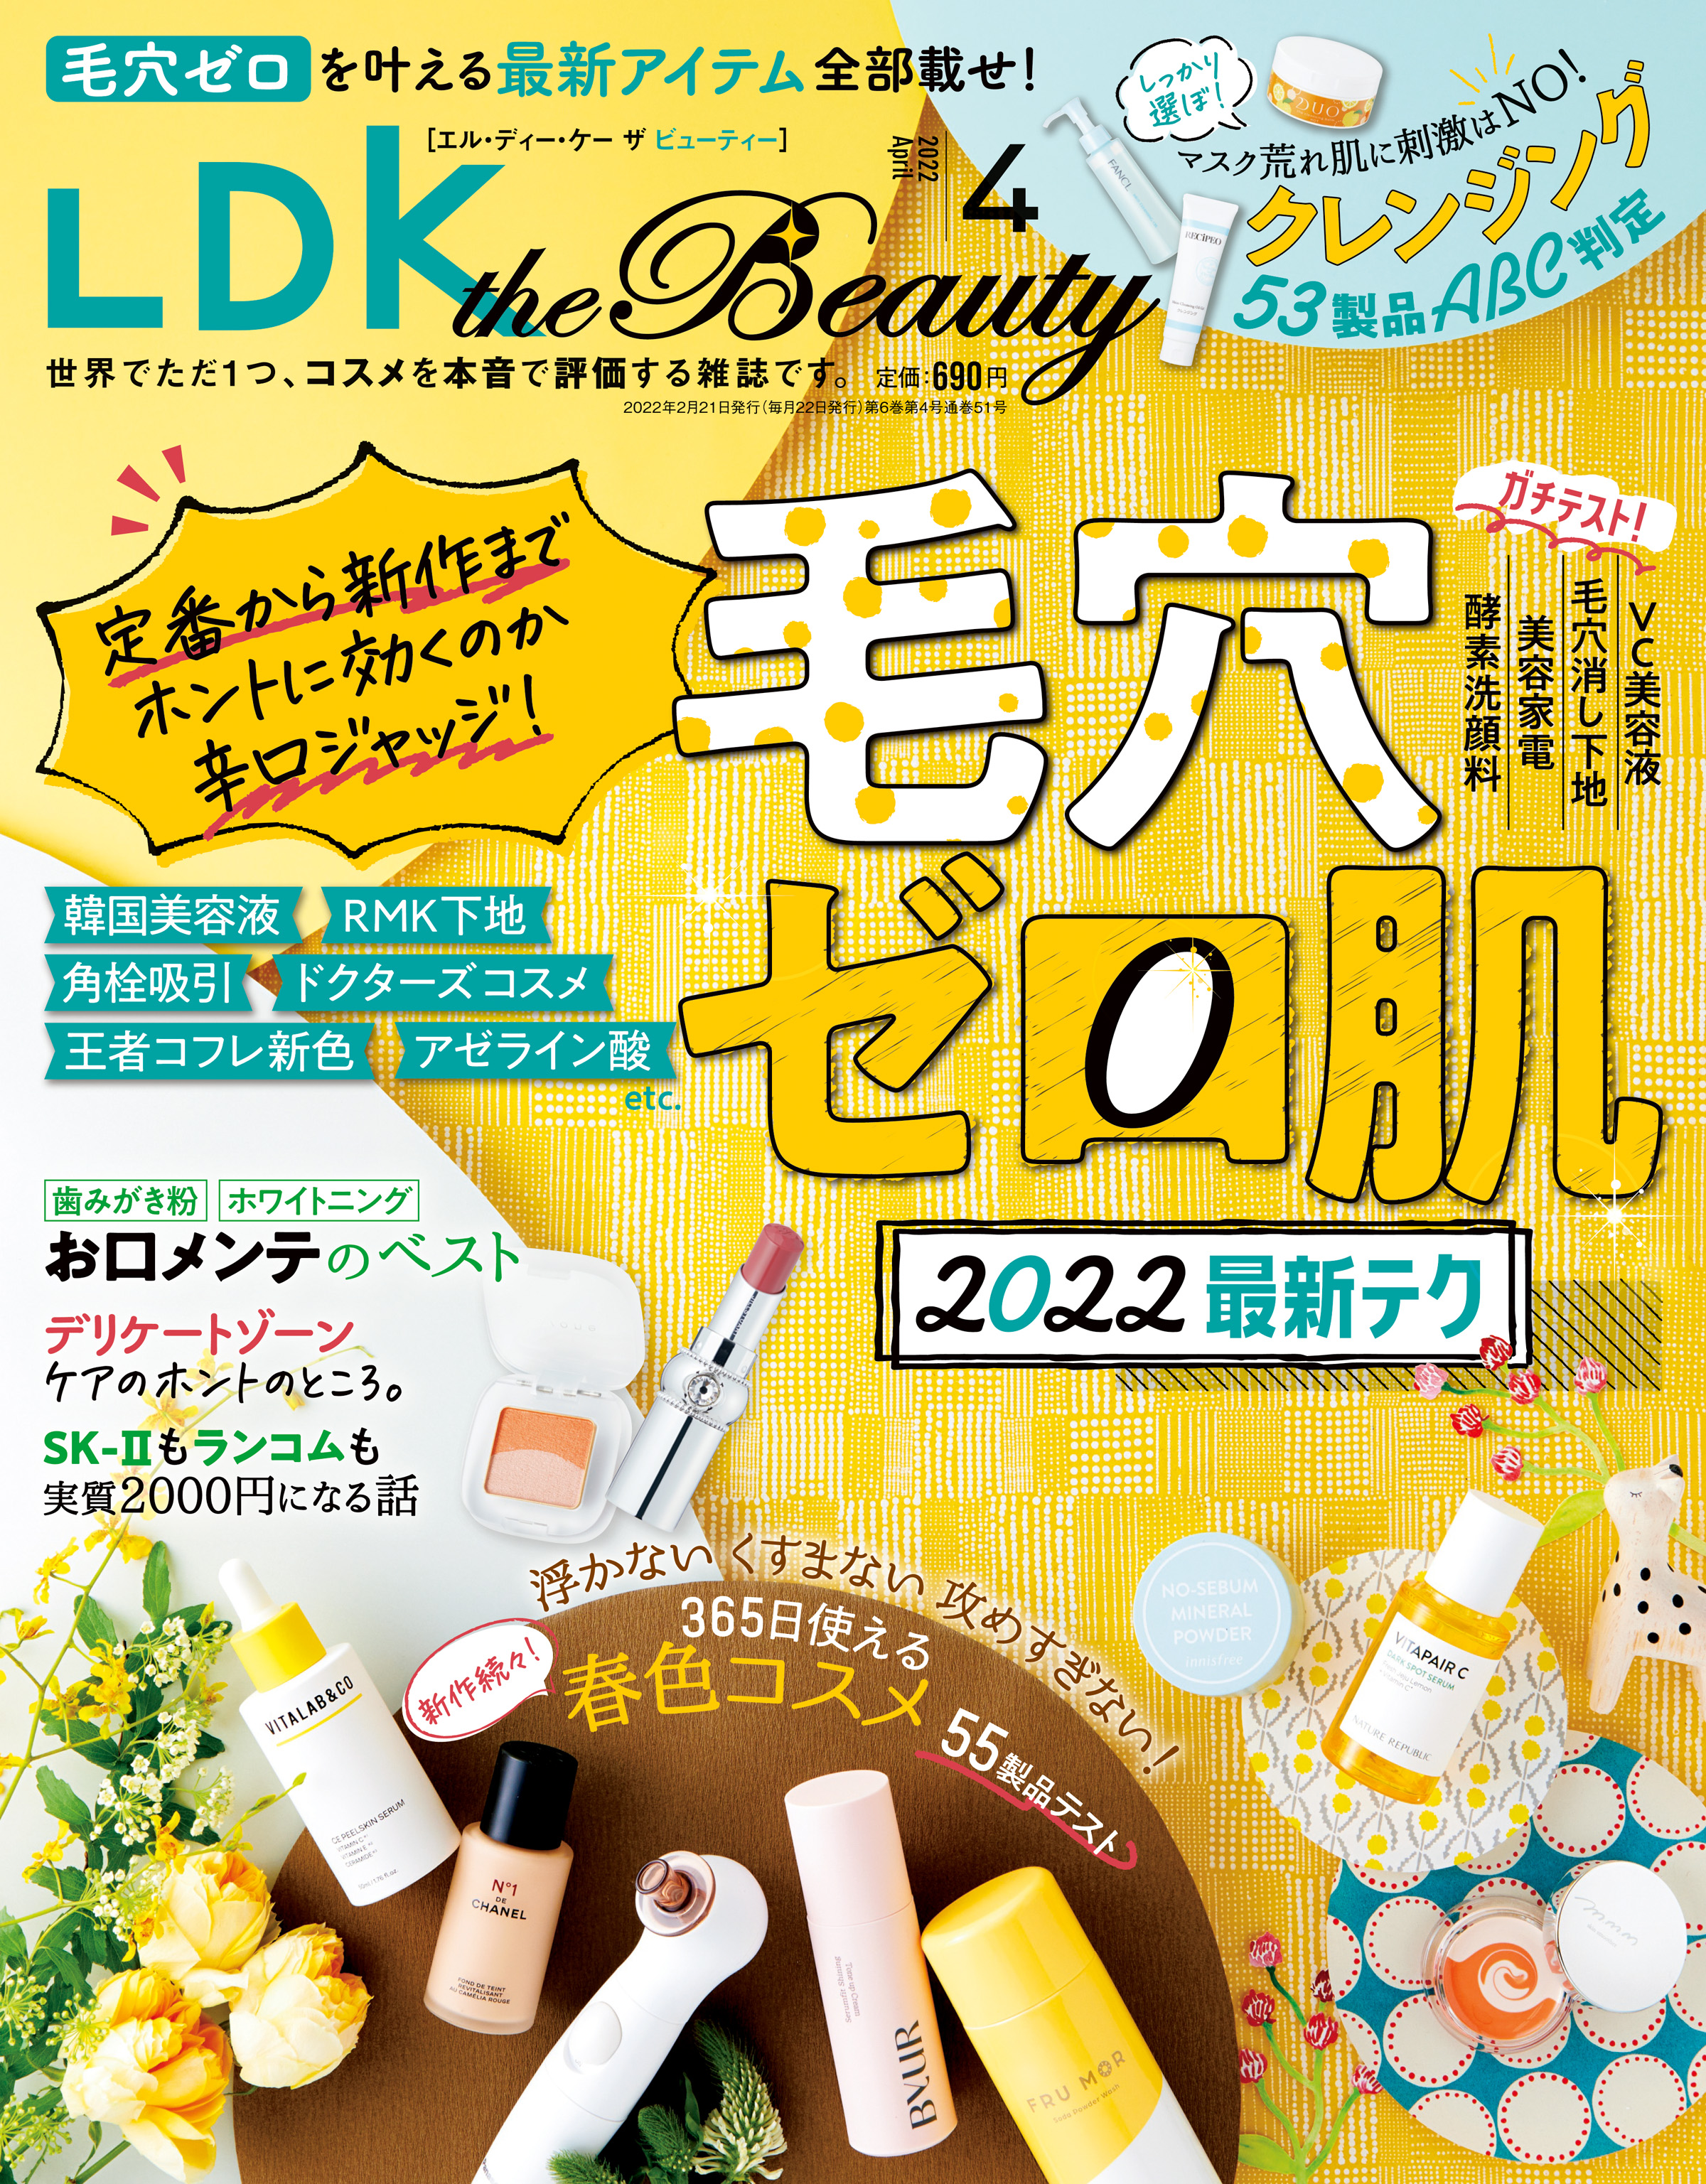 LDK the Beauty 2018年 9月号